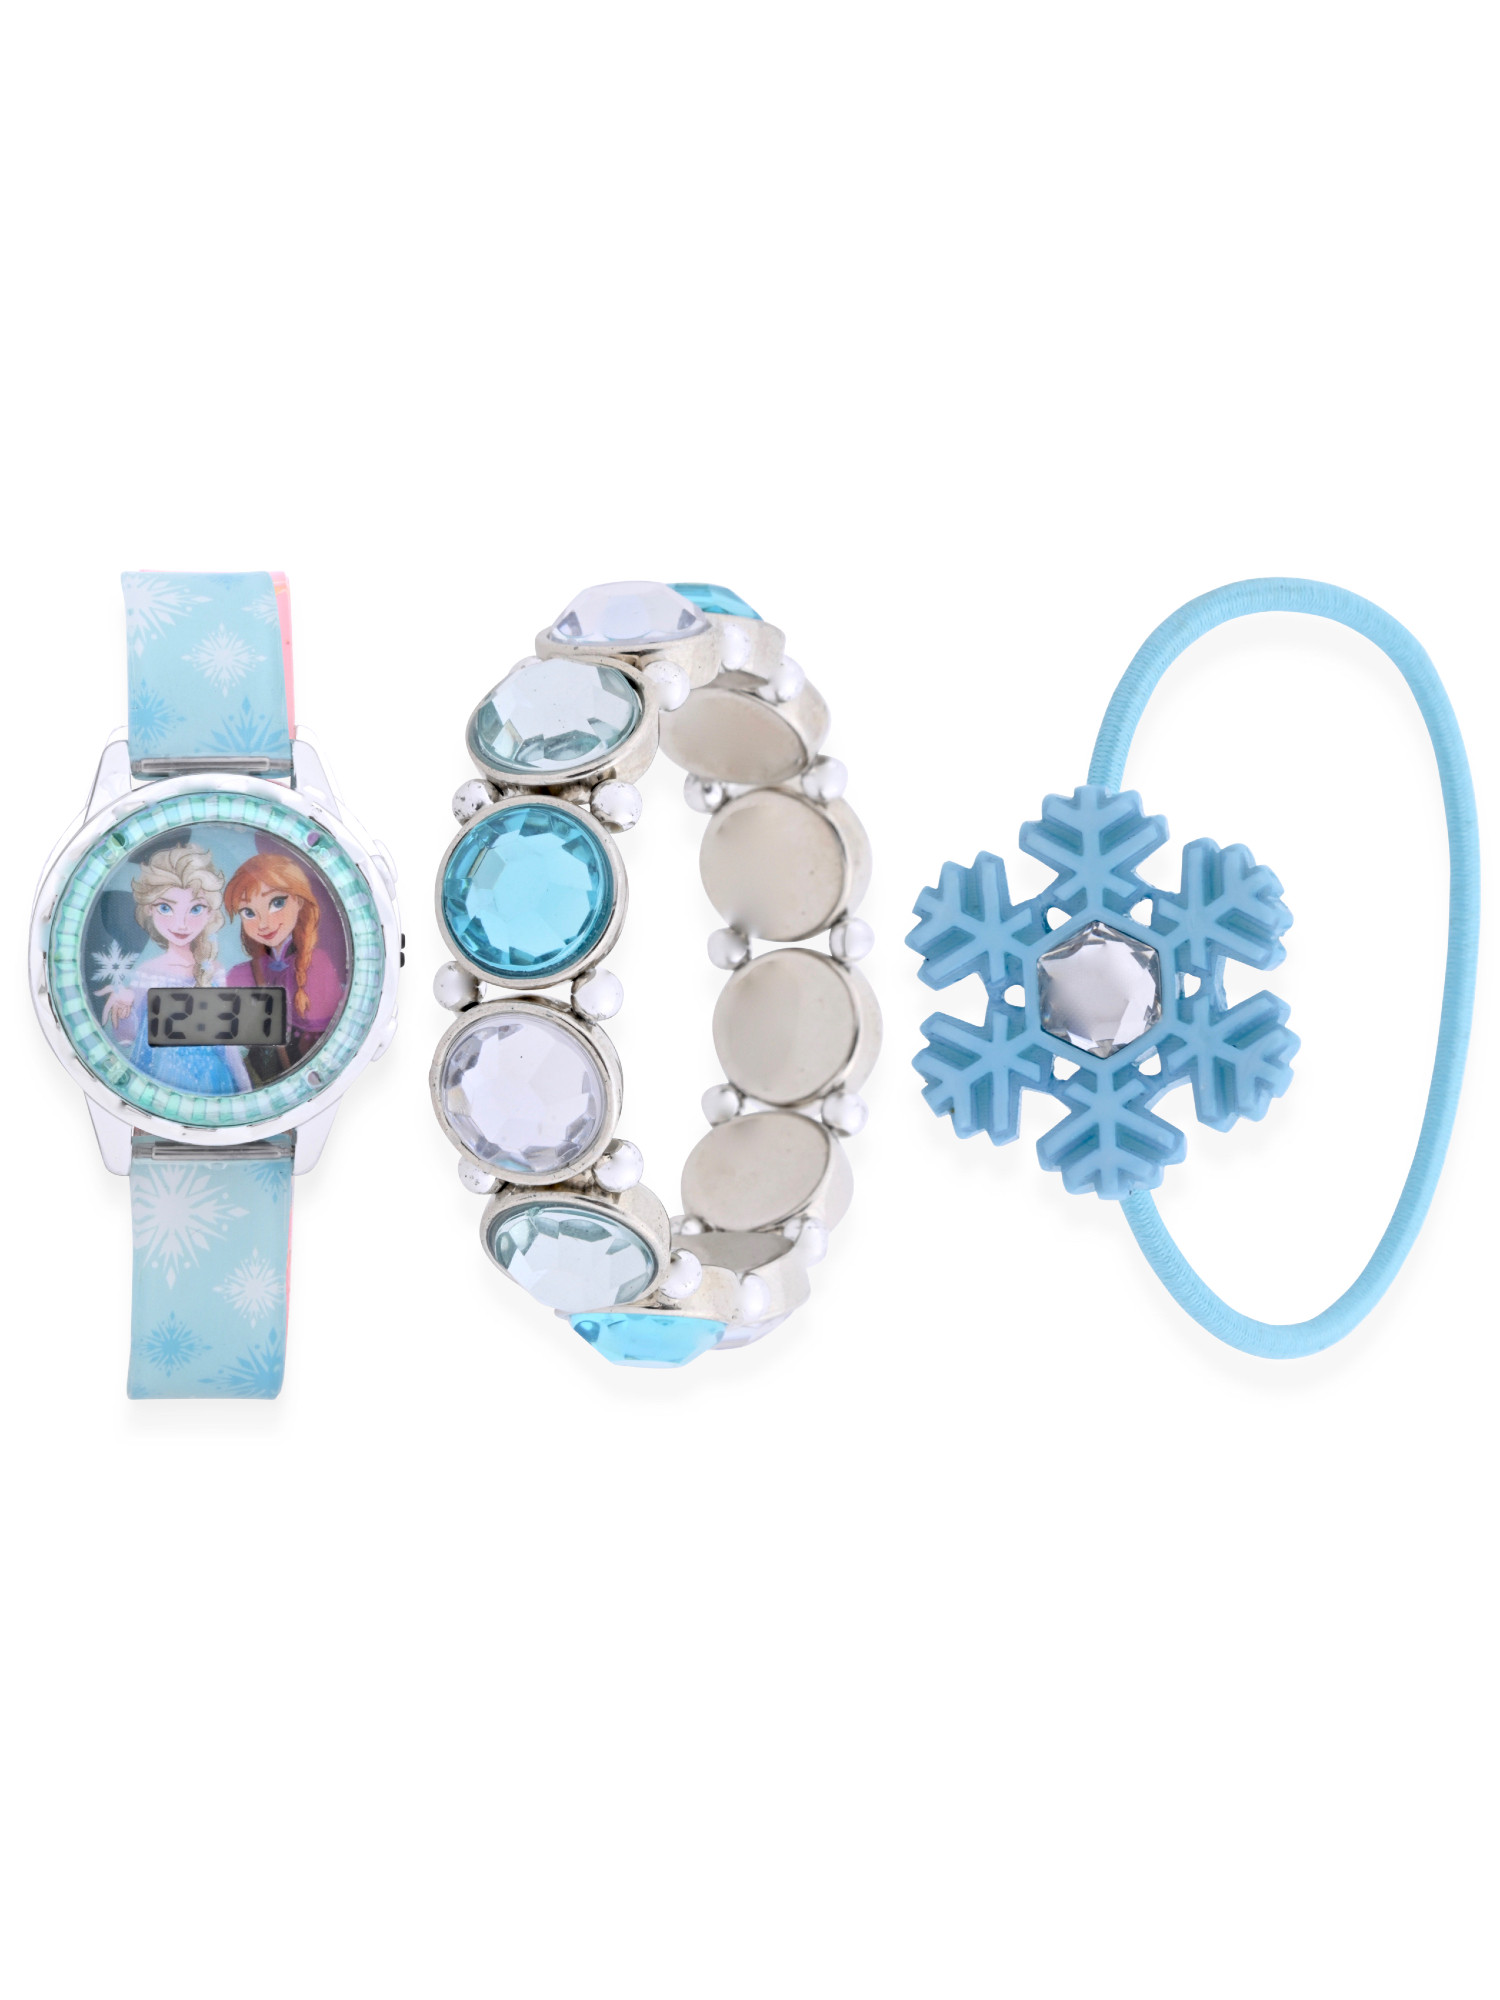 Disney Frozen Girl's Flashing LCD Blue Glitter Silicone Watch & Matching Bracelets 3 Piece Set - image 1 of 6